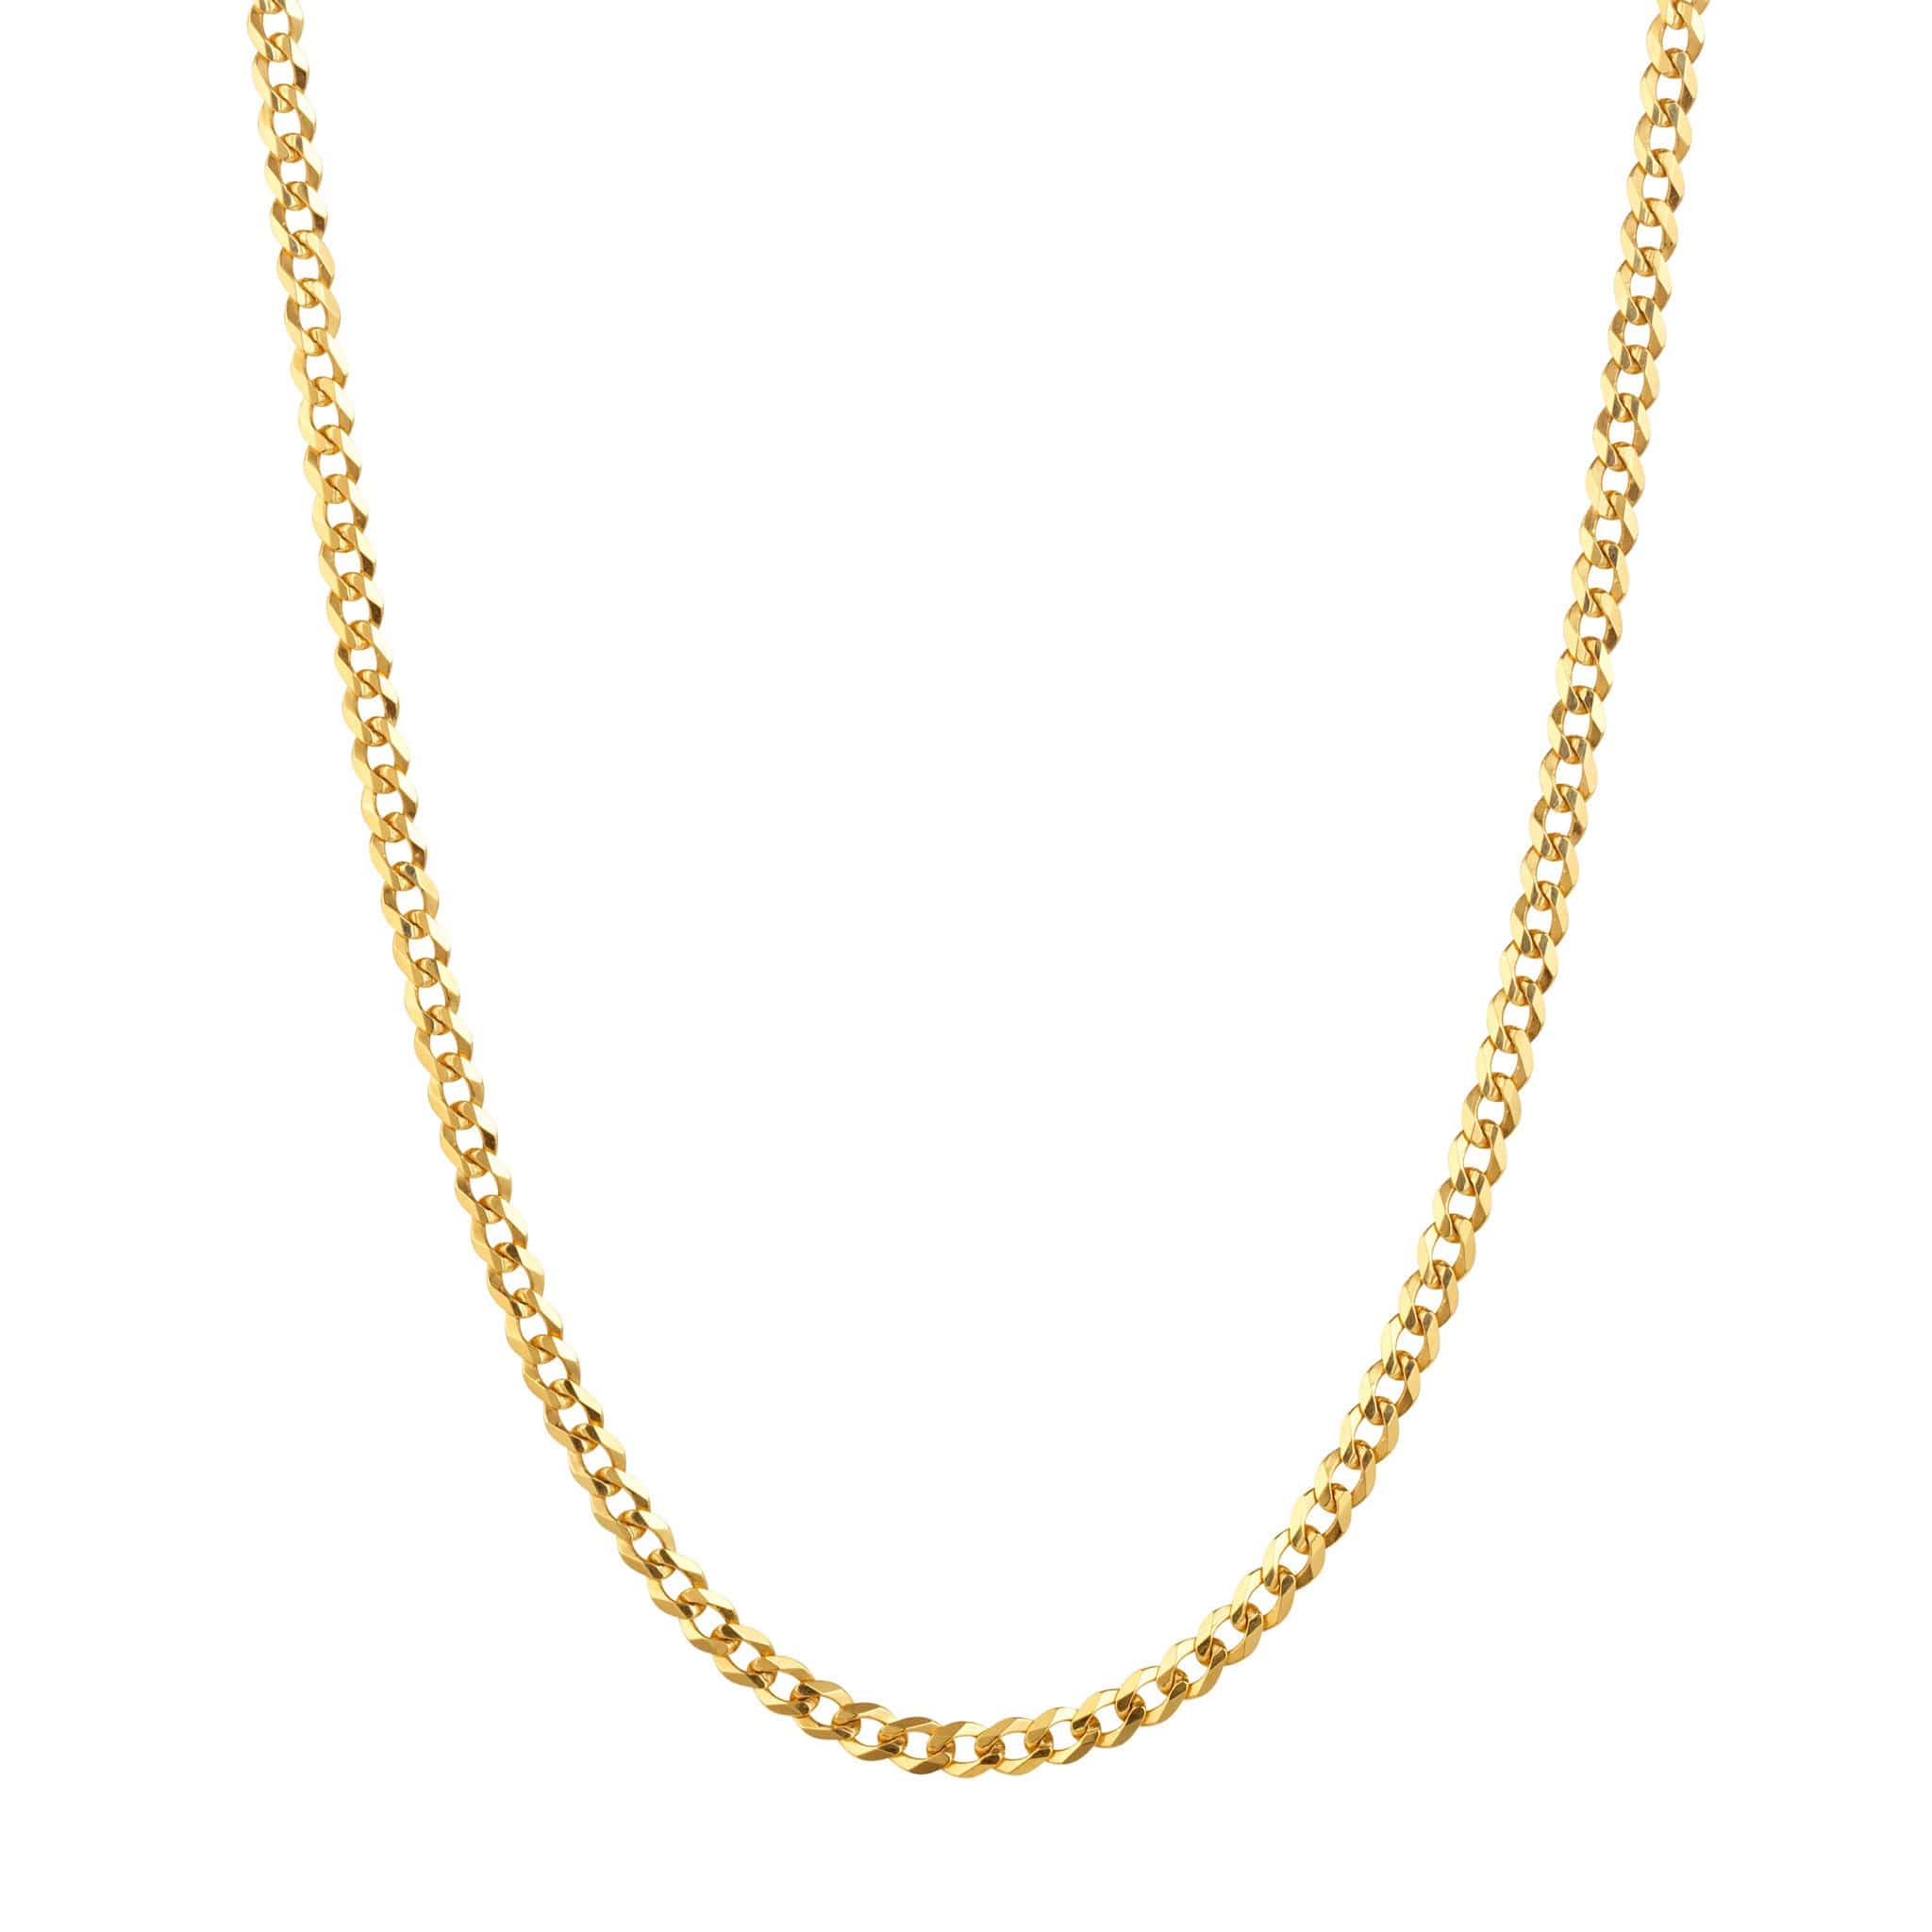 A gold curb chain against a white background.